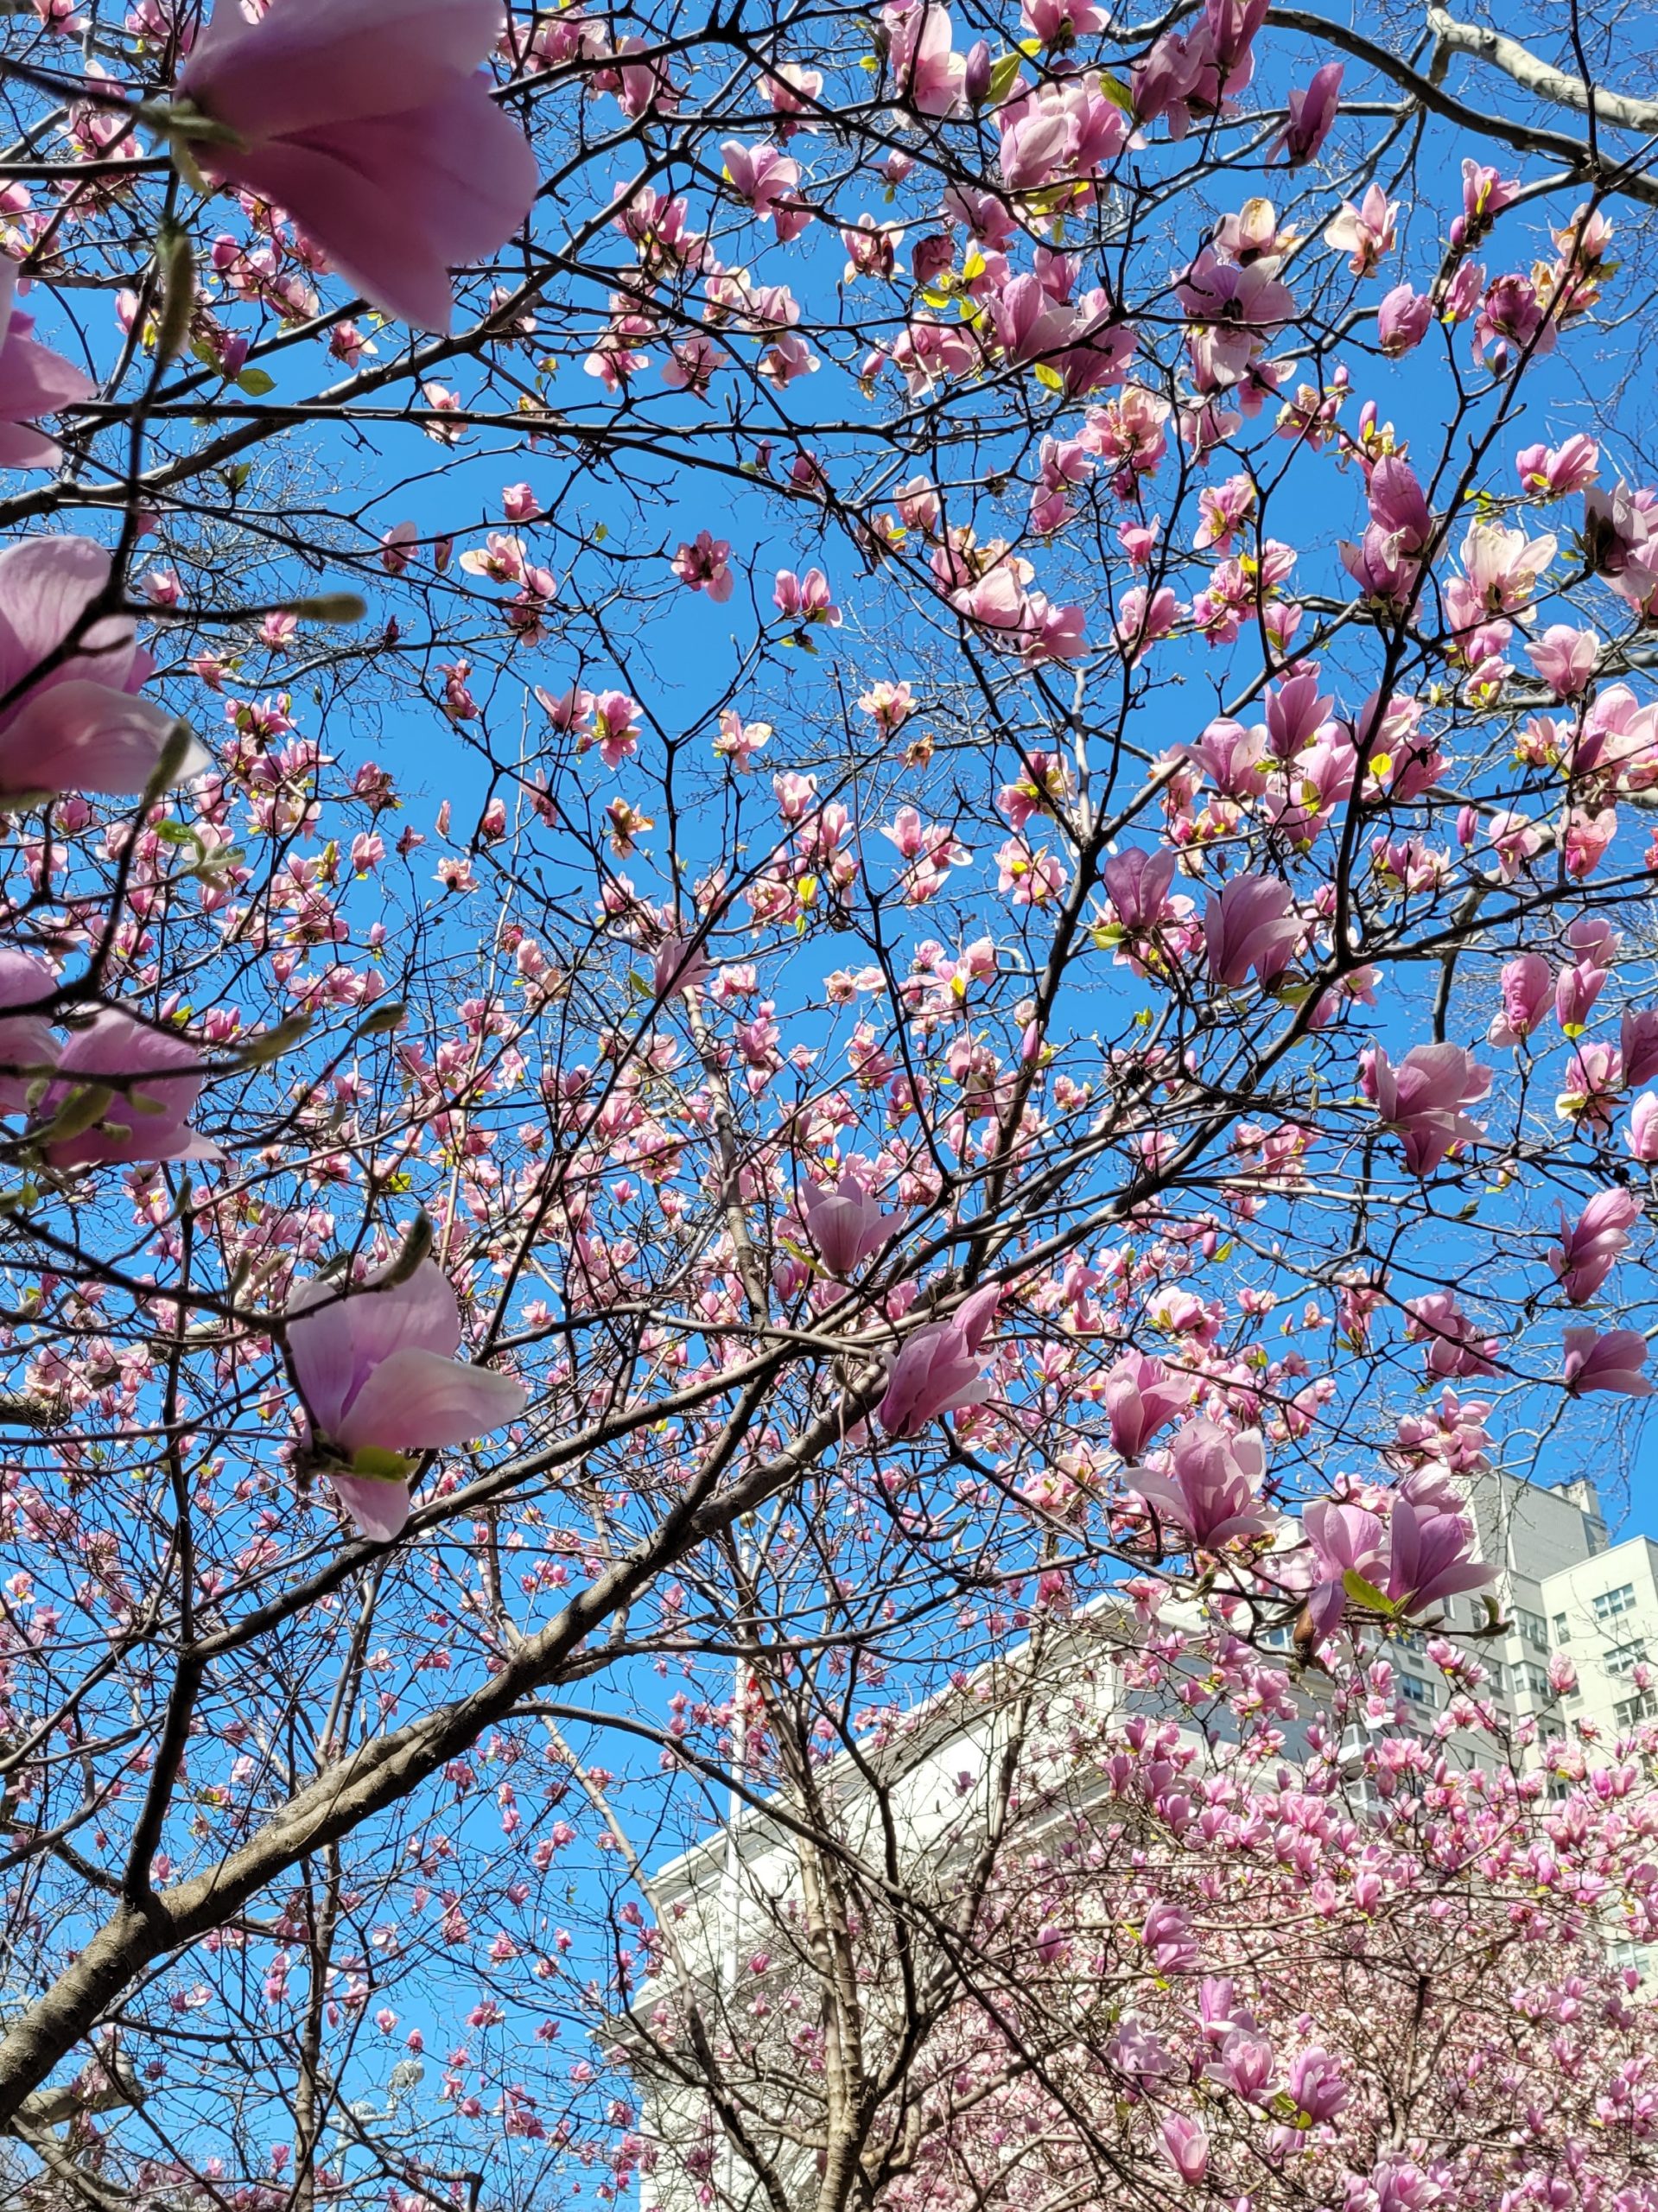 soft pink magnolia trees at Washington square park